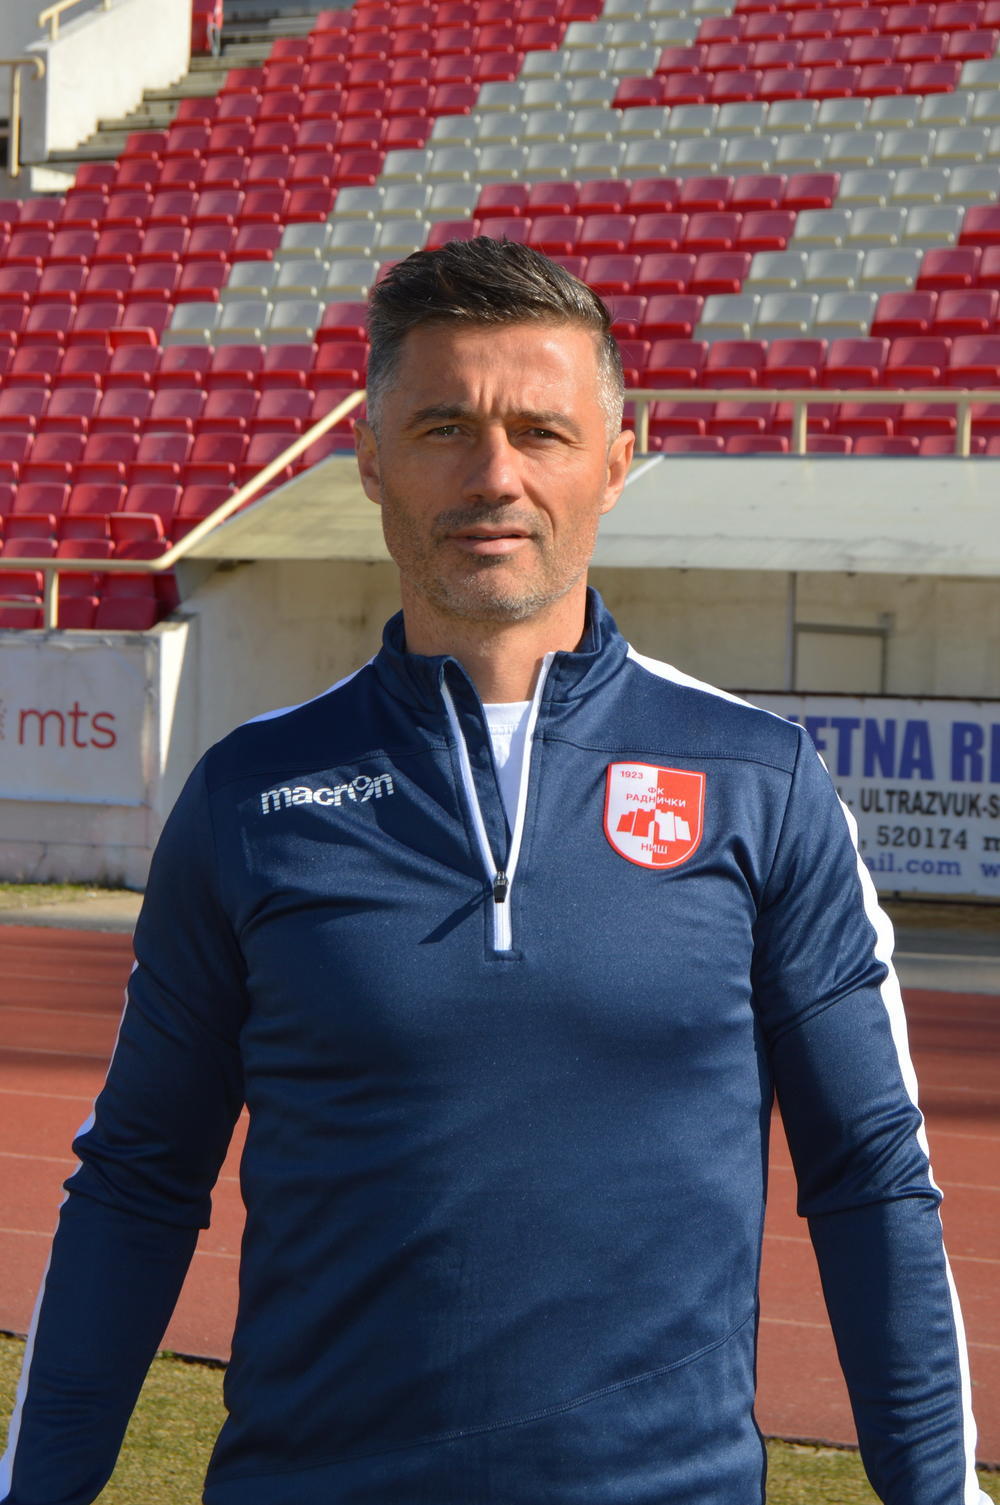 FK Radnički Niš